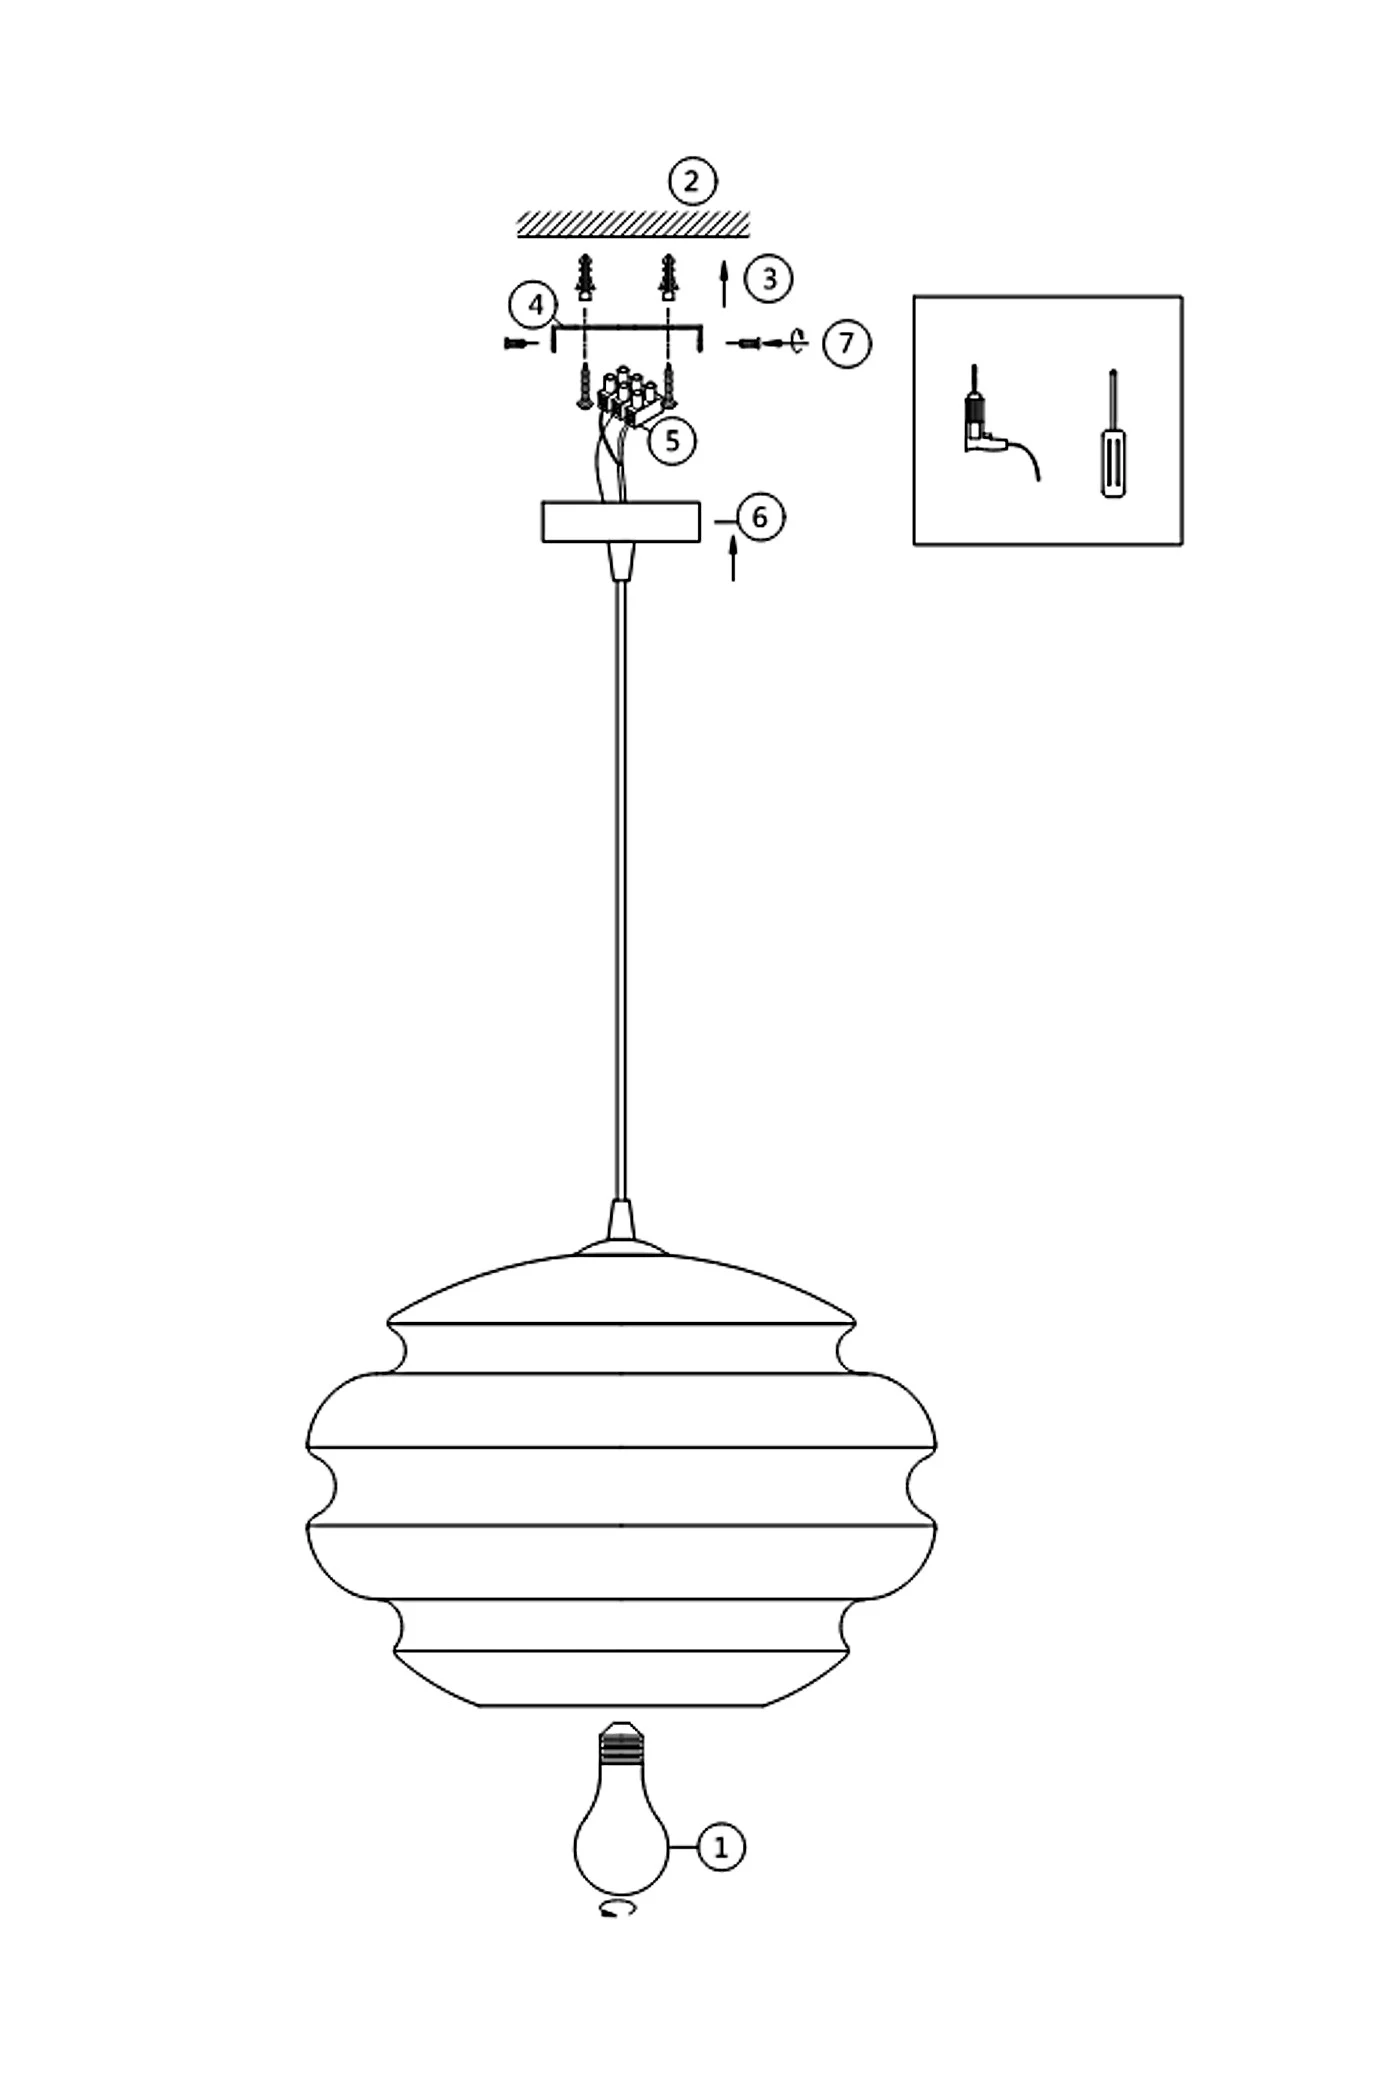   
                        
                        Люстра MAYTONI (Германия) 48196    
                         в стиле Модерн.  
                        Тип источника света: светодиодная лампа, сменная.                         Форма: Круг.                         Цвета плафонов и подвесок: Синий.                         Материал: Стекло.                          фото 3